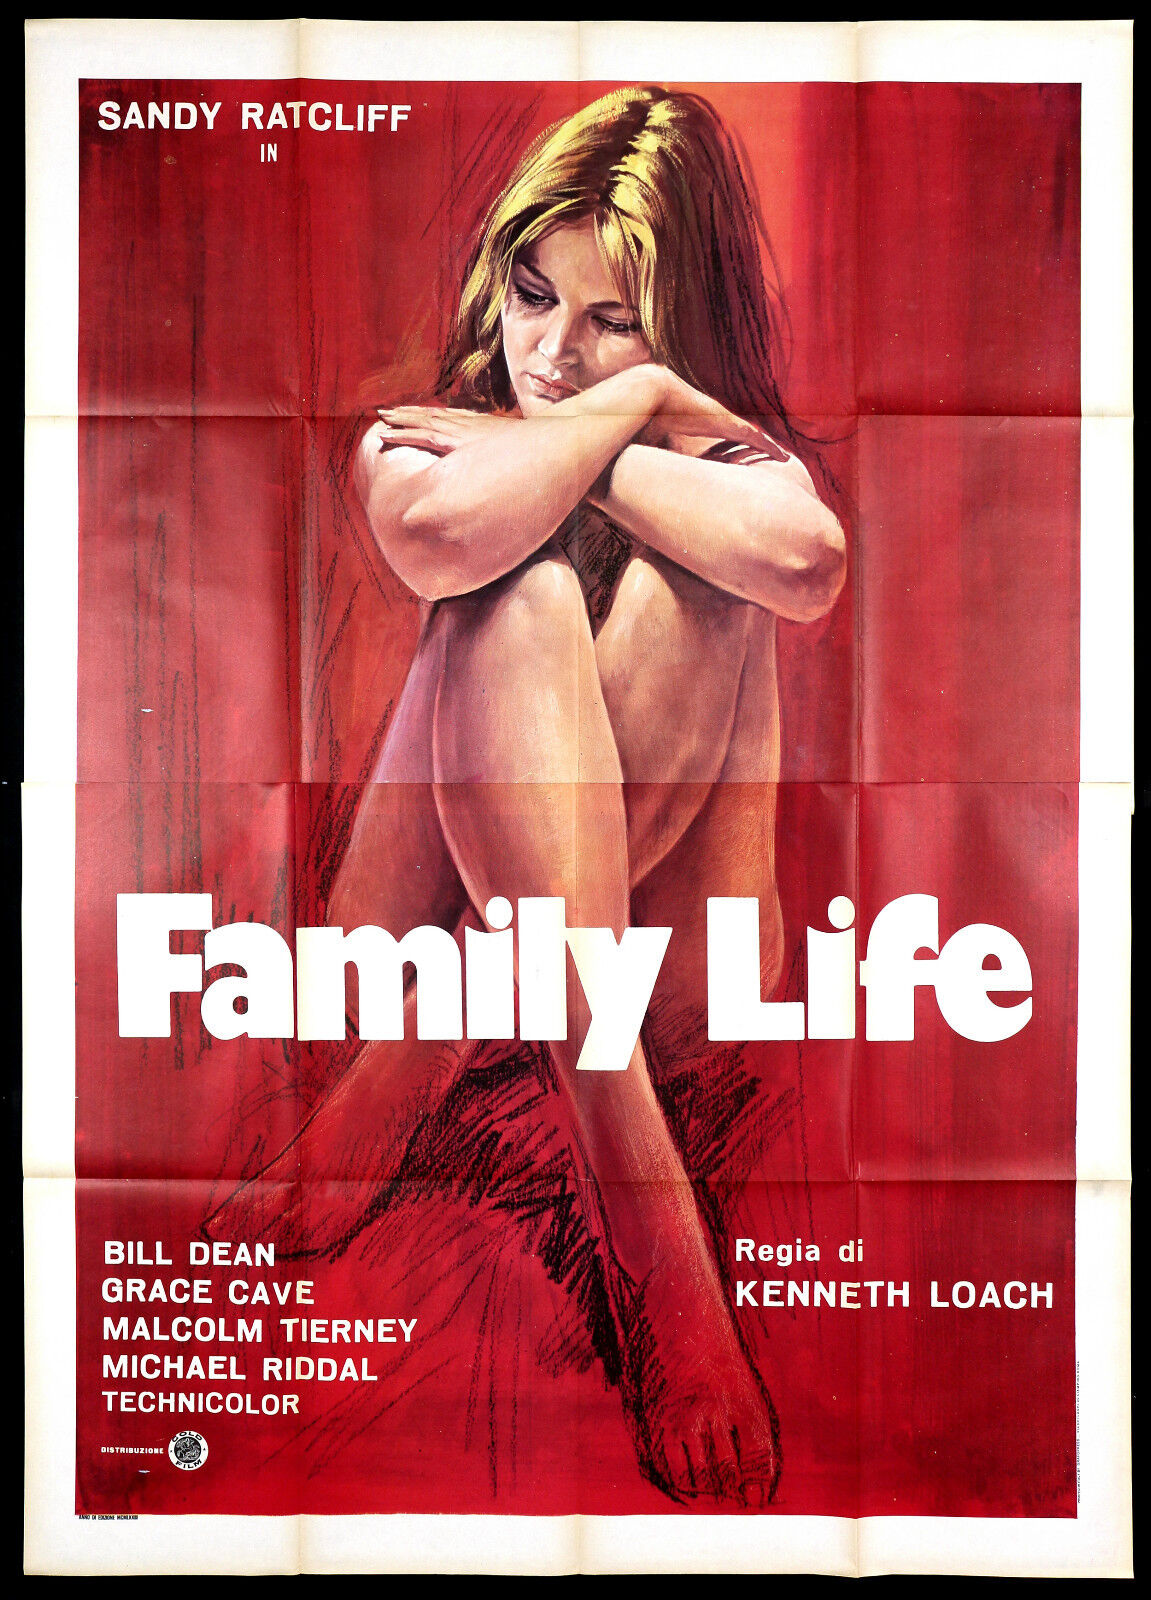 FAMILY LIFE MANIFESTO CINEMA FILM SEXY KEN LOACH DRAMMATICO 1971 MOVIE POSTER 4F 15% ZNIŻKI